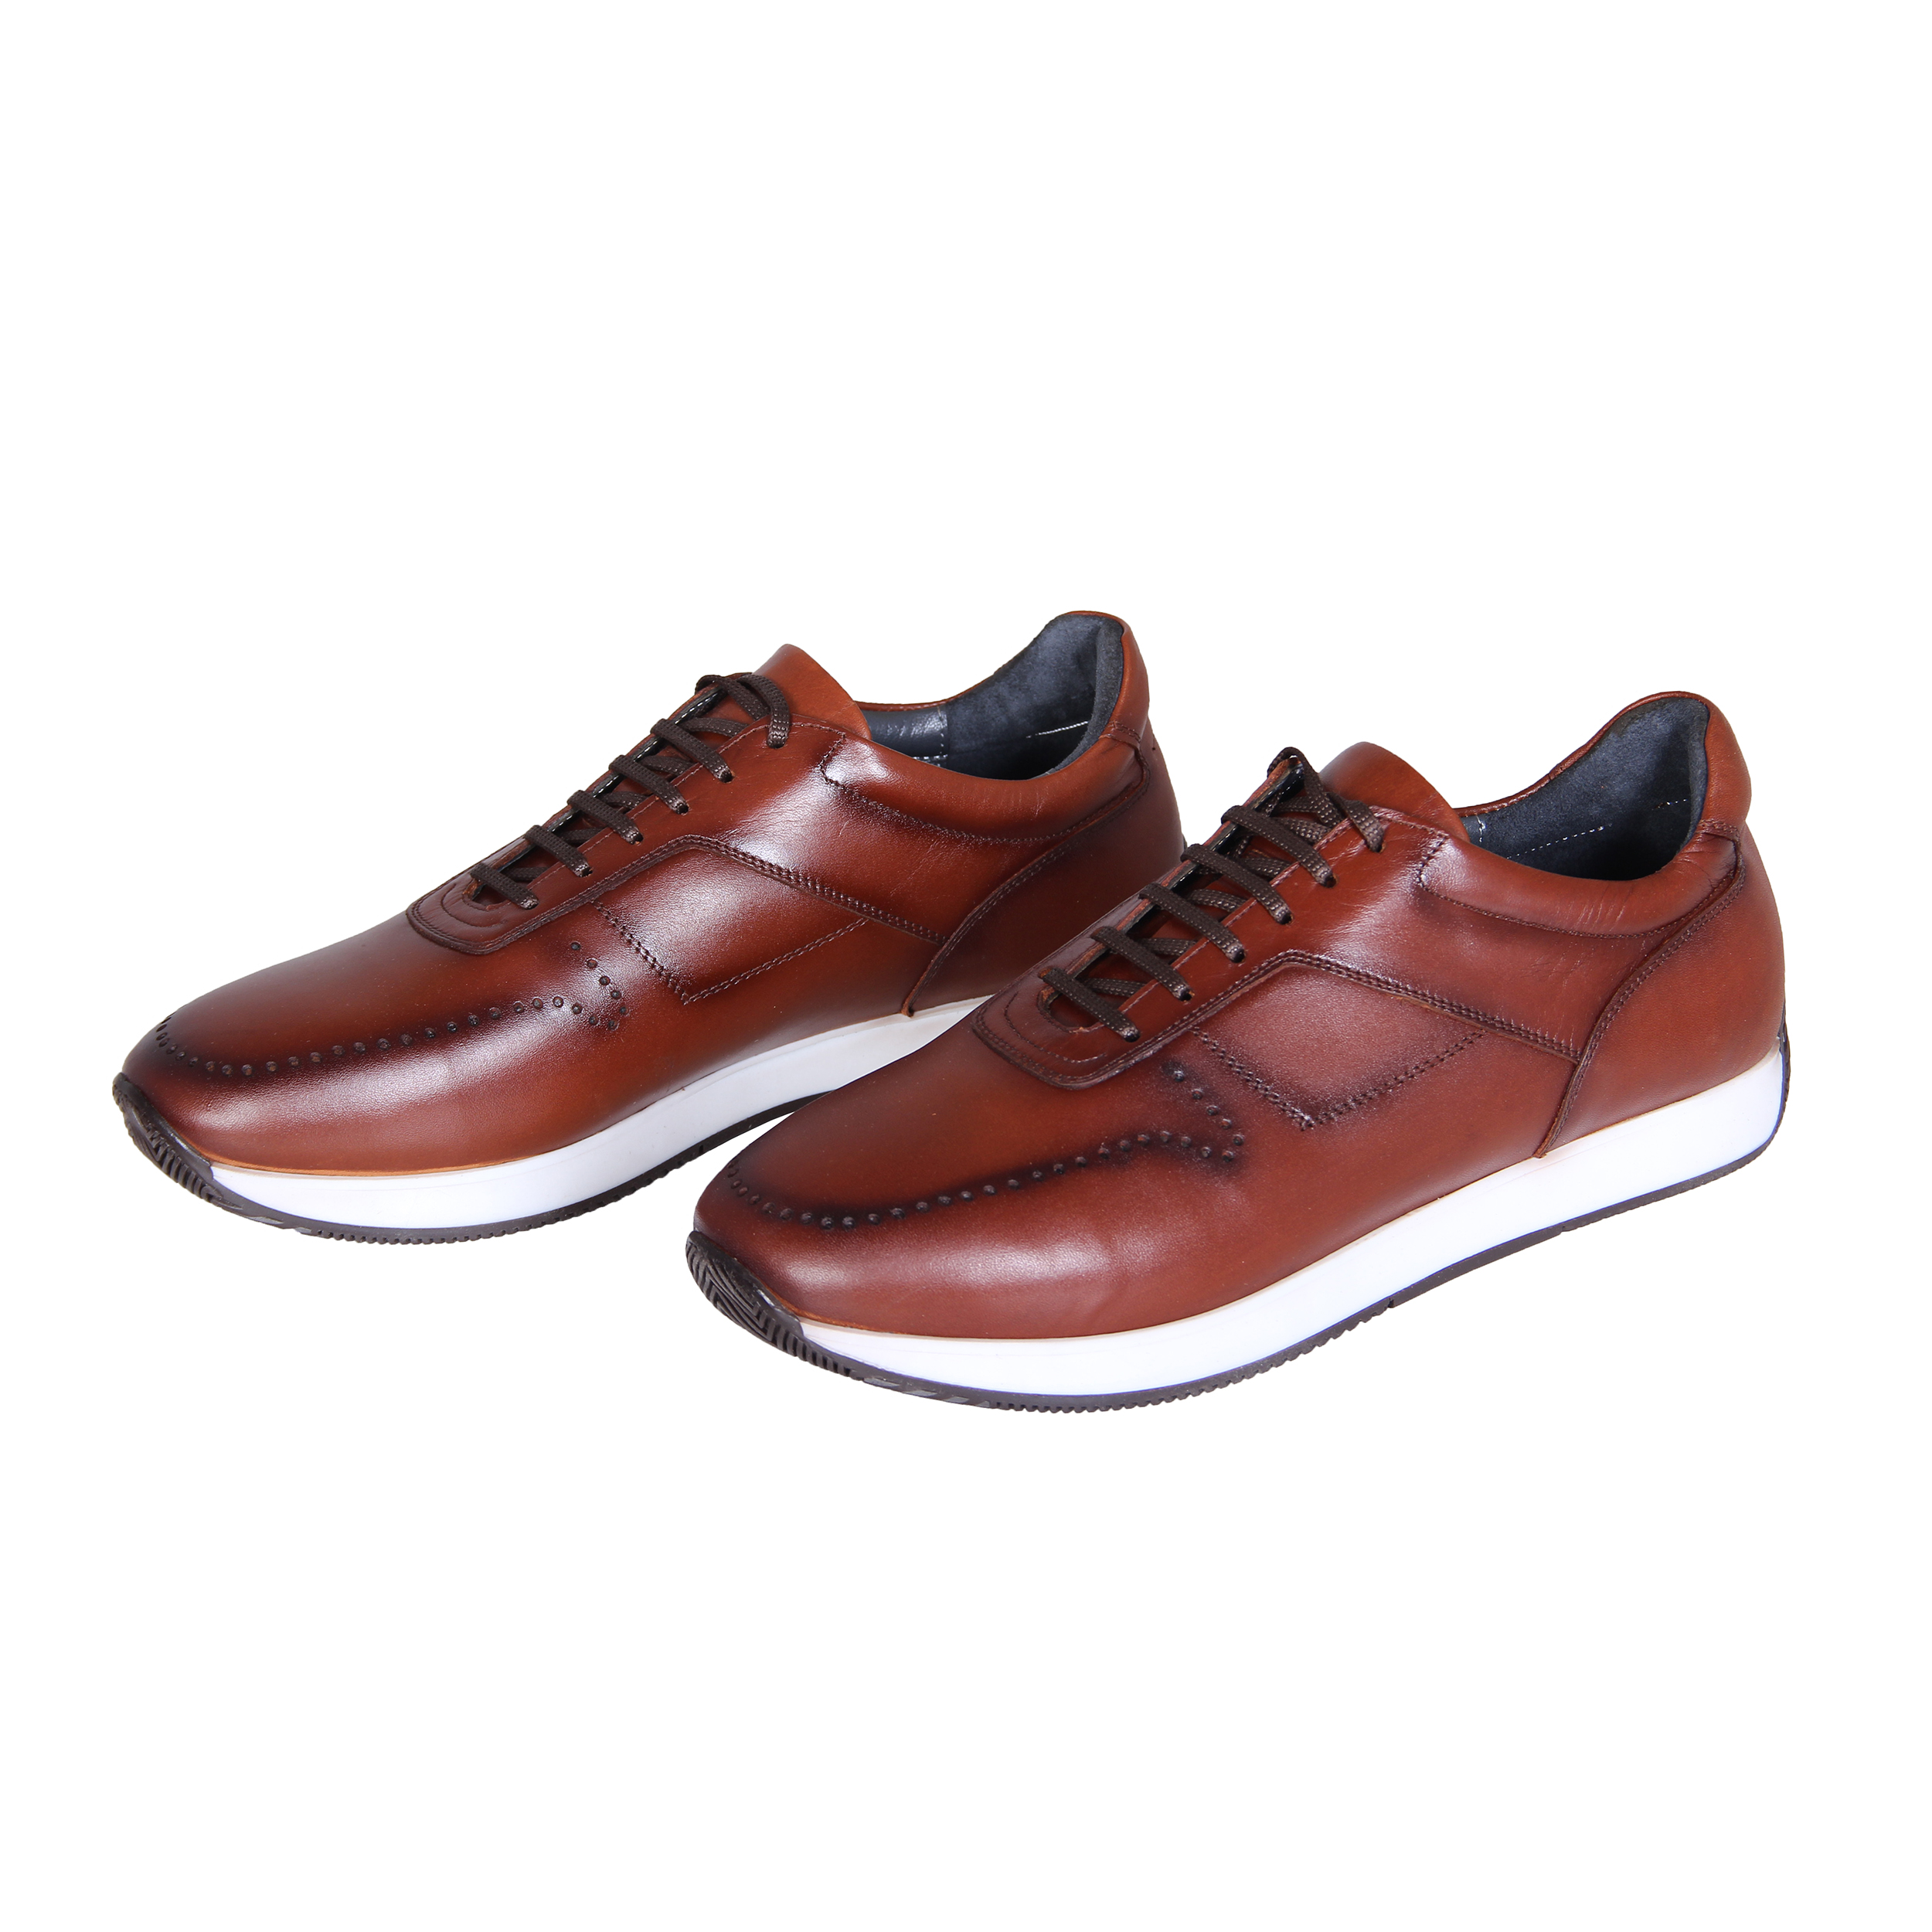 SHAHRECHARM leather men's casual shoes ,GH5003-5 Model